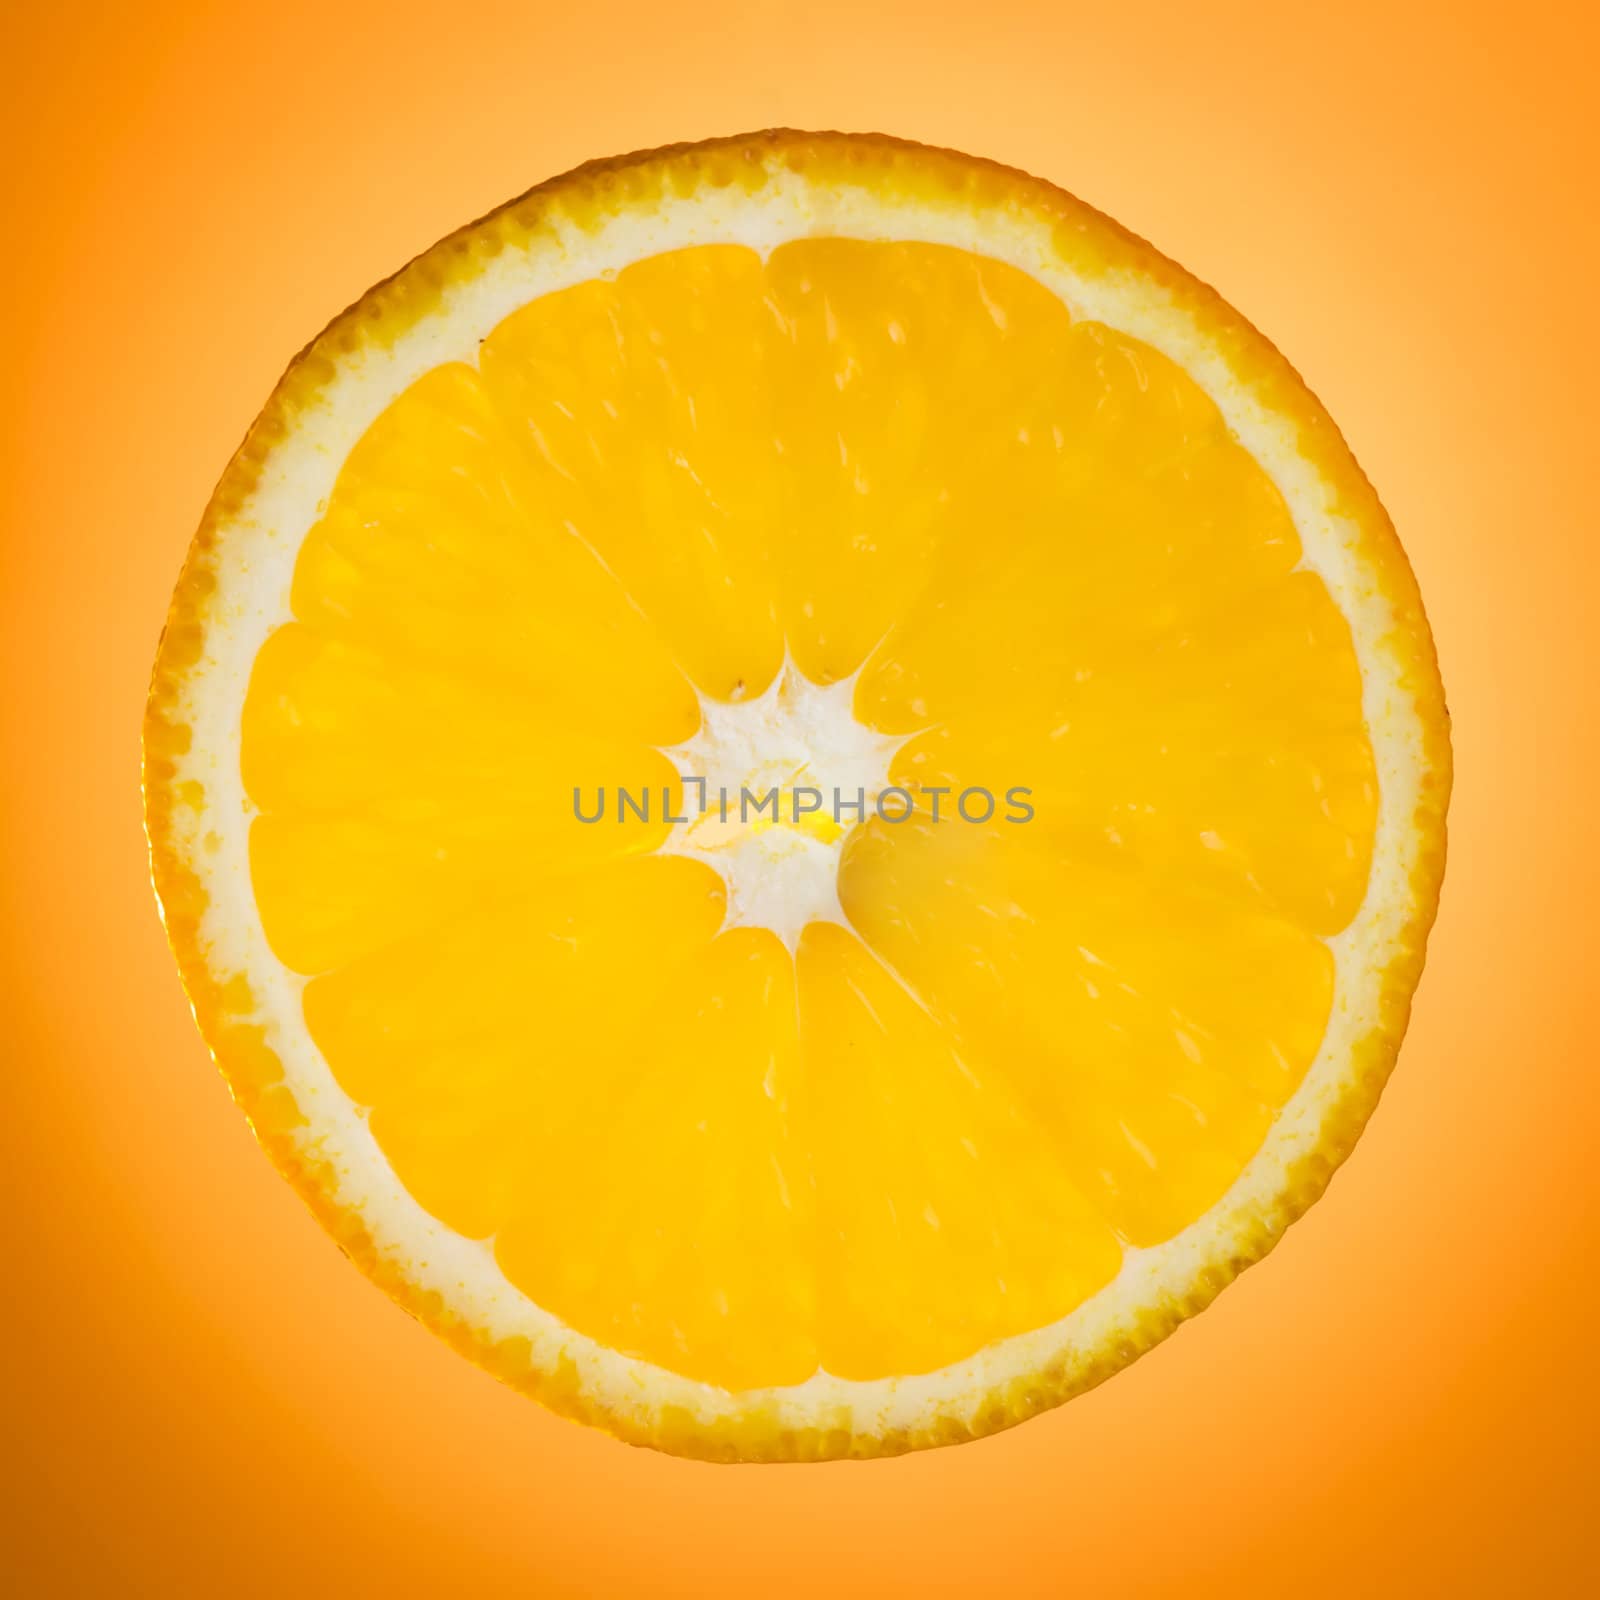 backlit orange slice over the graduated orange background